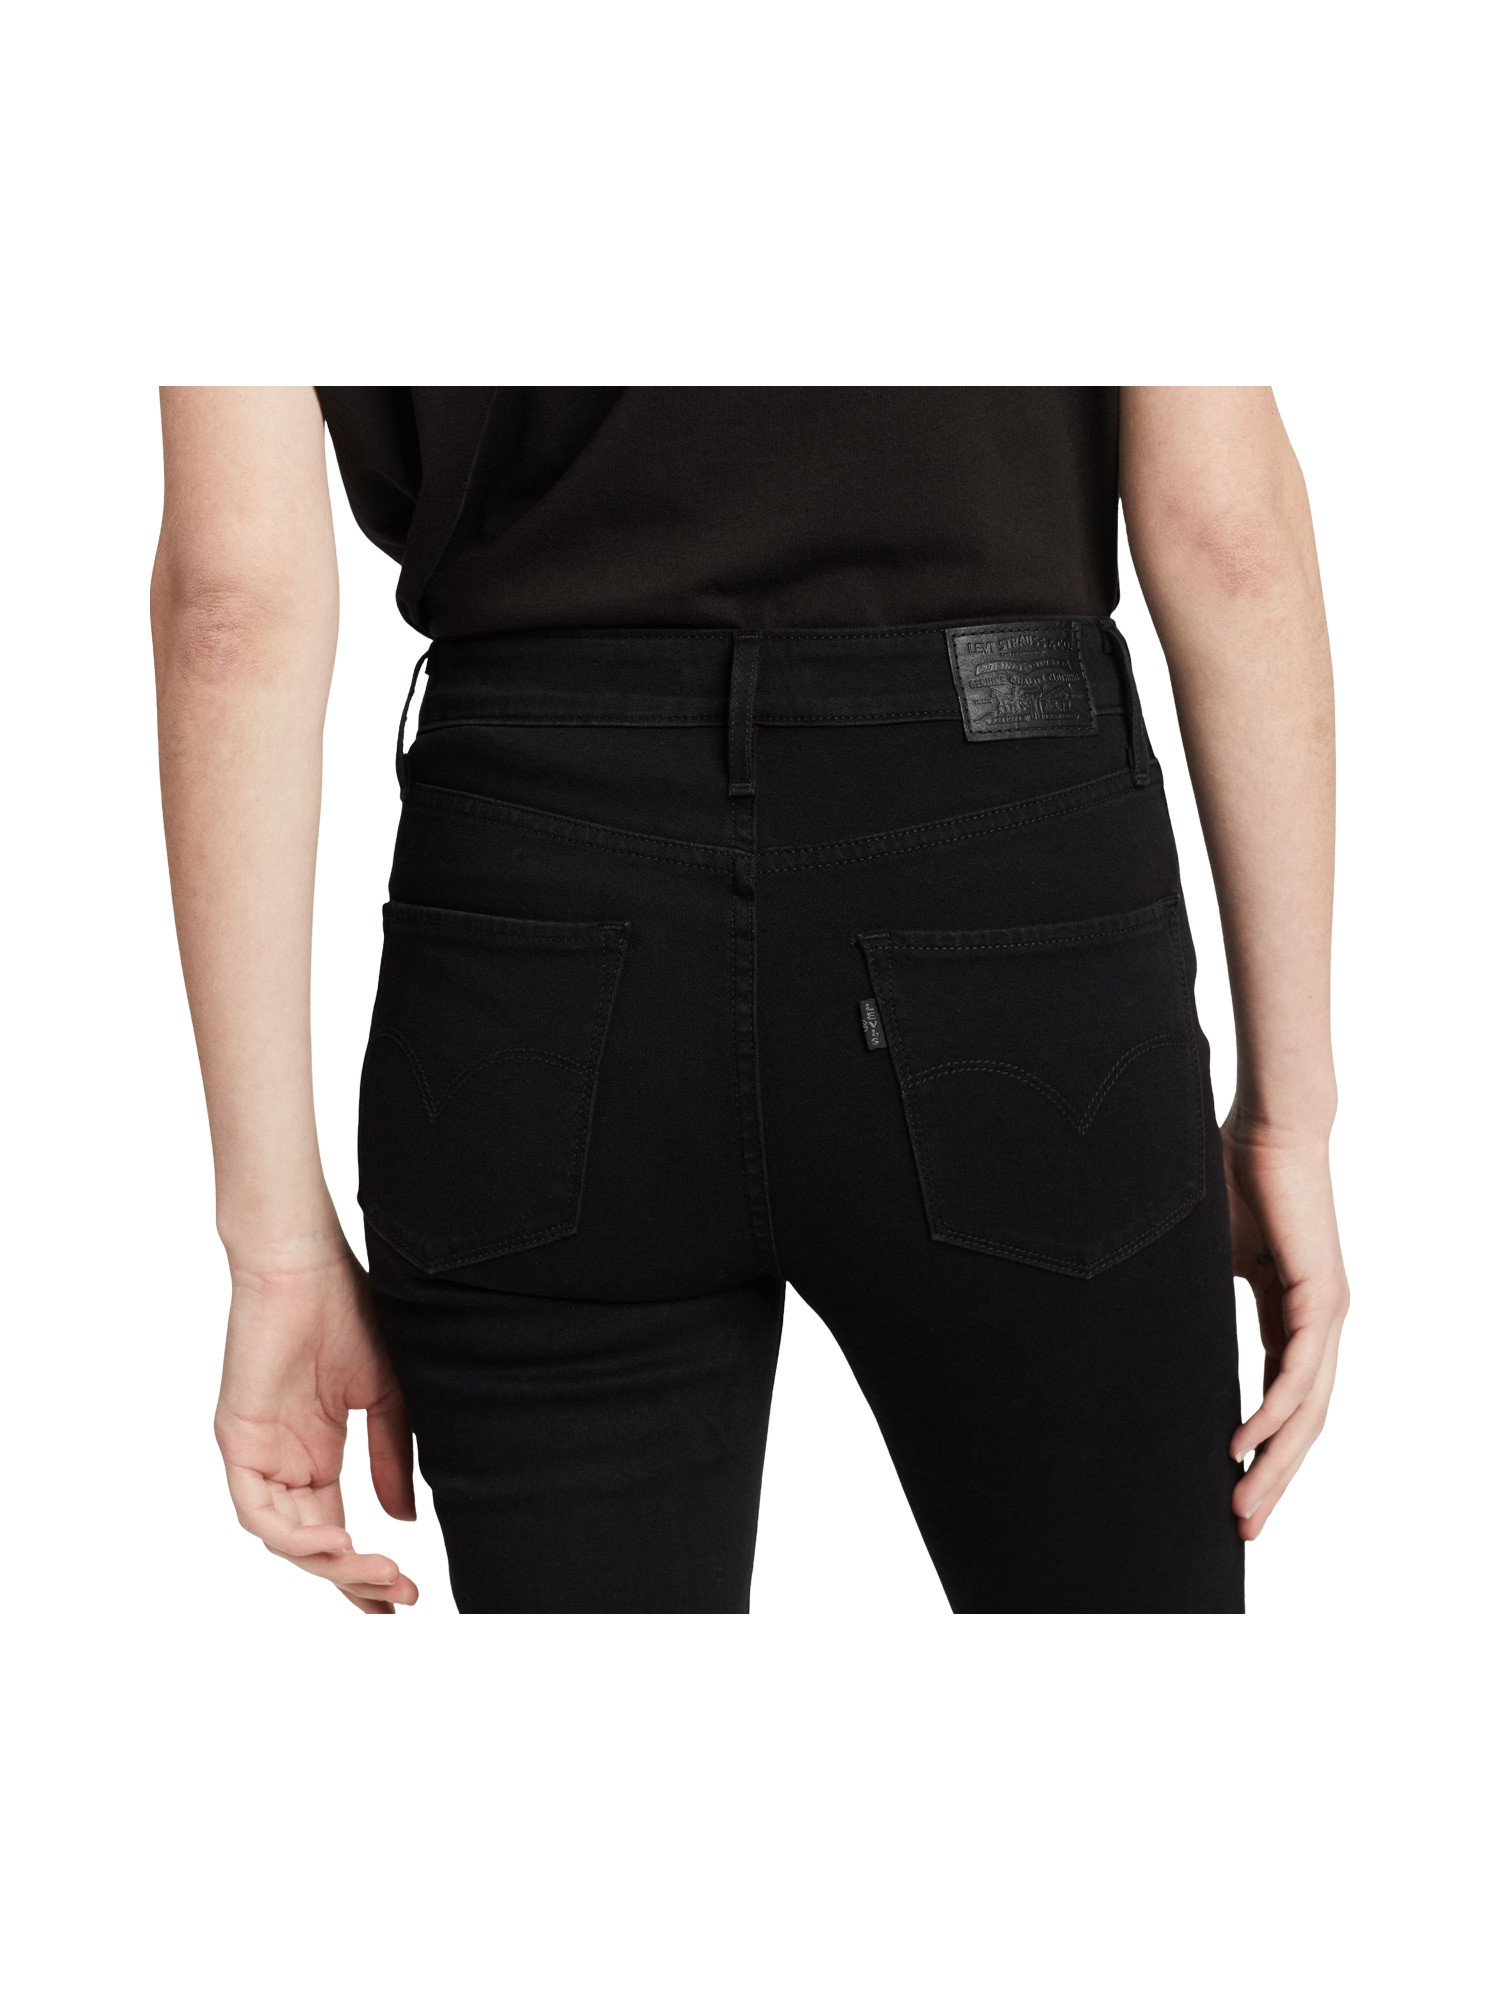 Levi's - 721™ skinny high rise jeans, Black, large image number 5